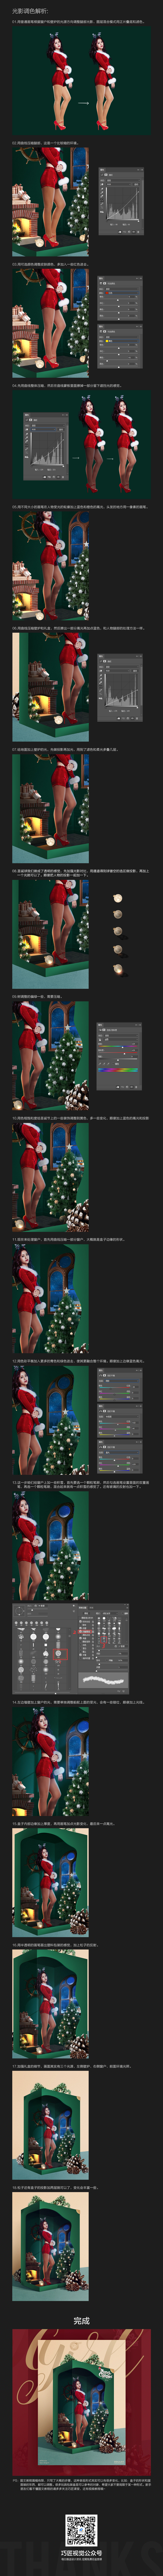 Photoshop合成创意的圣诞礼盒宣传海报,PS教程,素材中国网